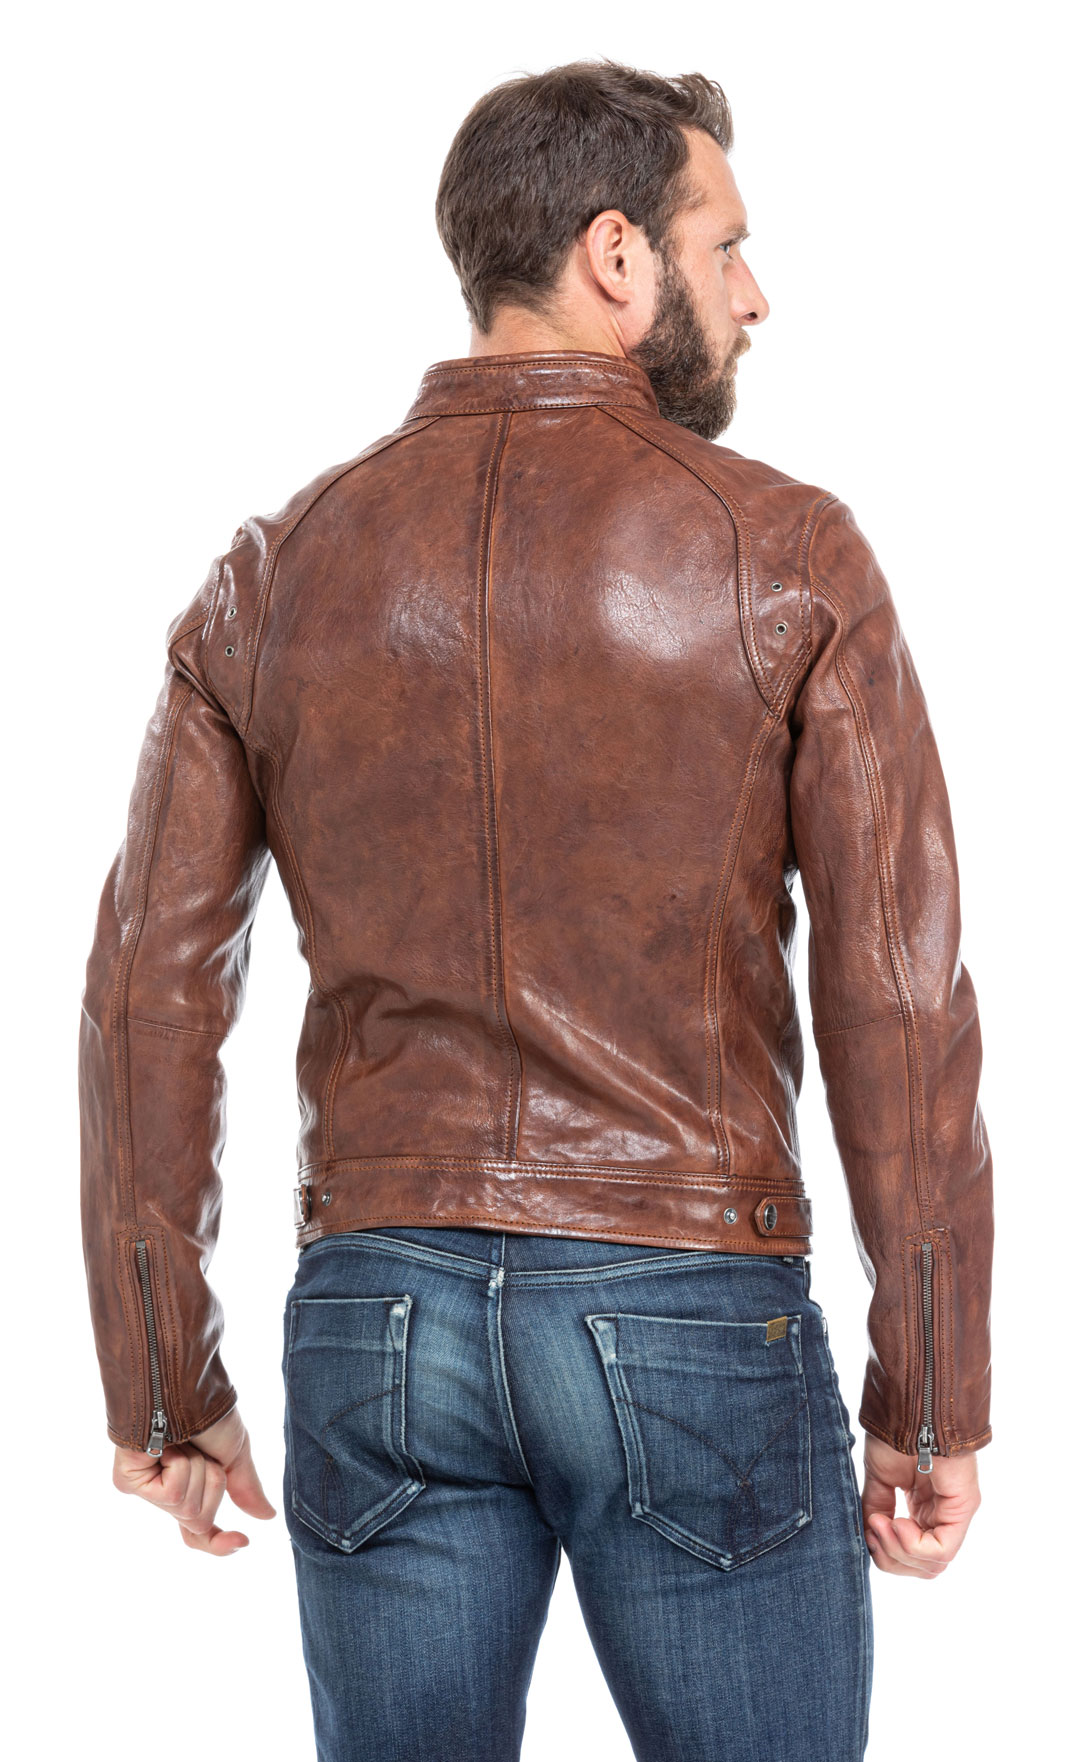 US Men Leather Jacket Hommes veste cuir Herren Lederjacke chaqueta de cuero R46b